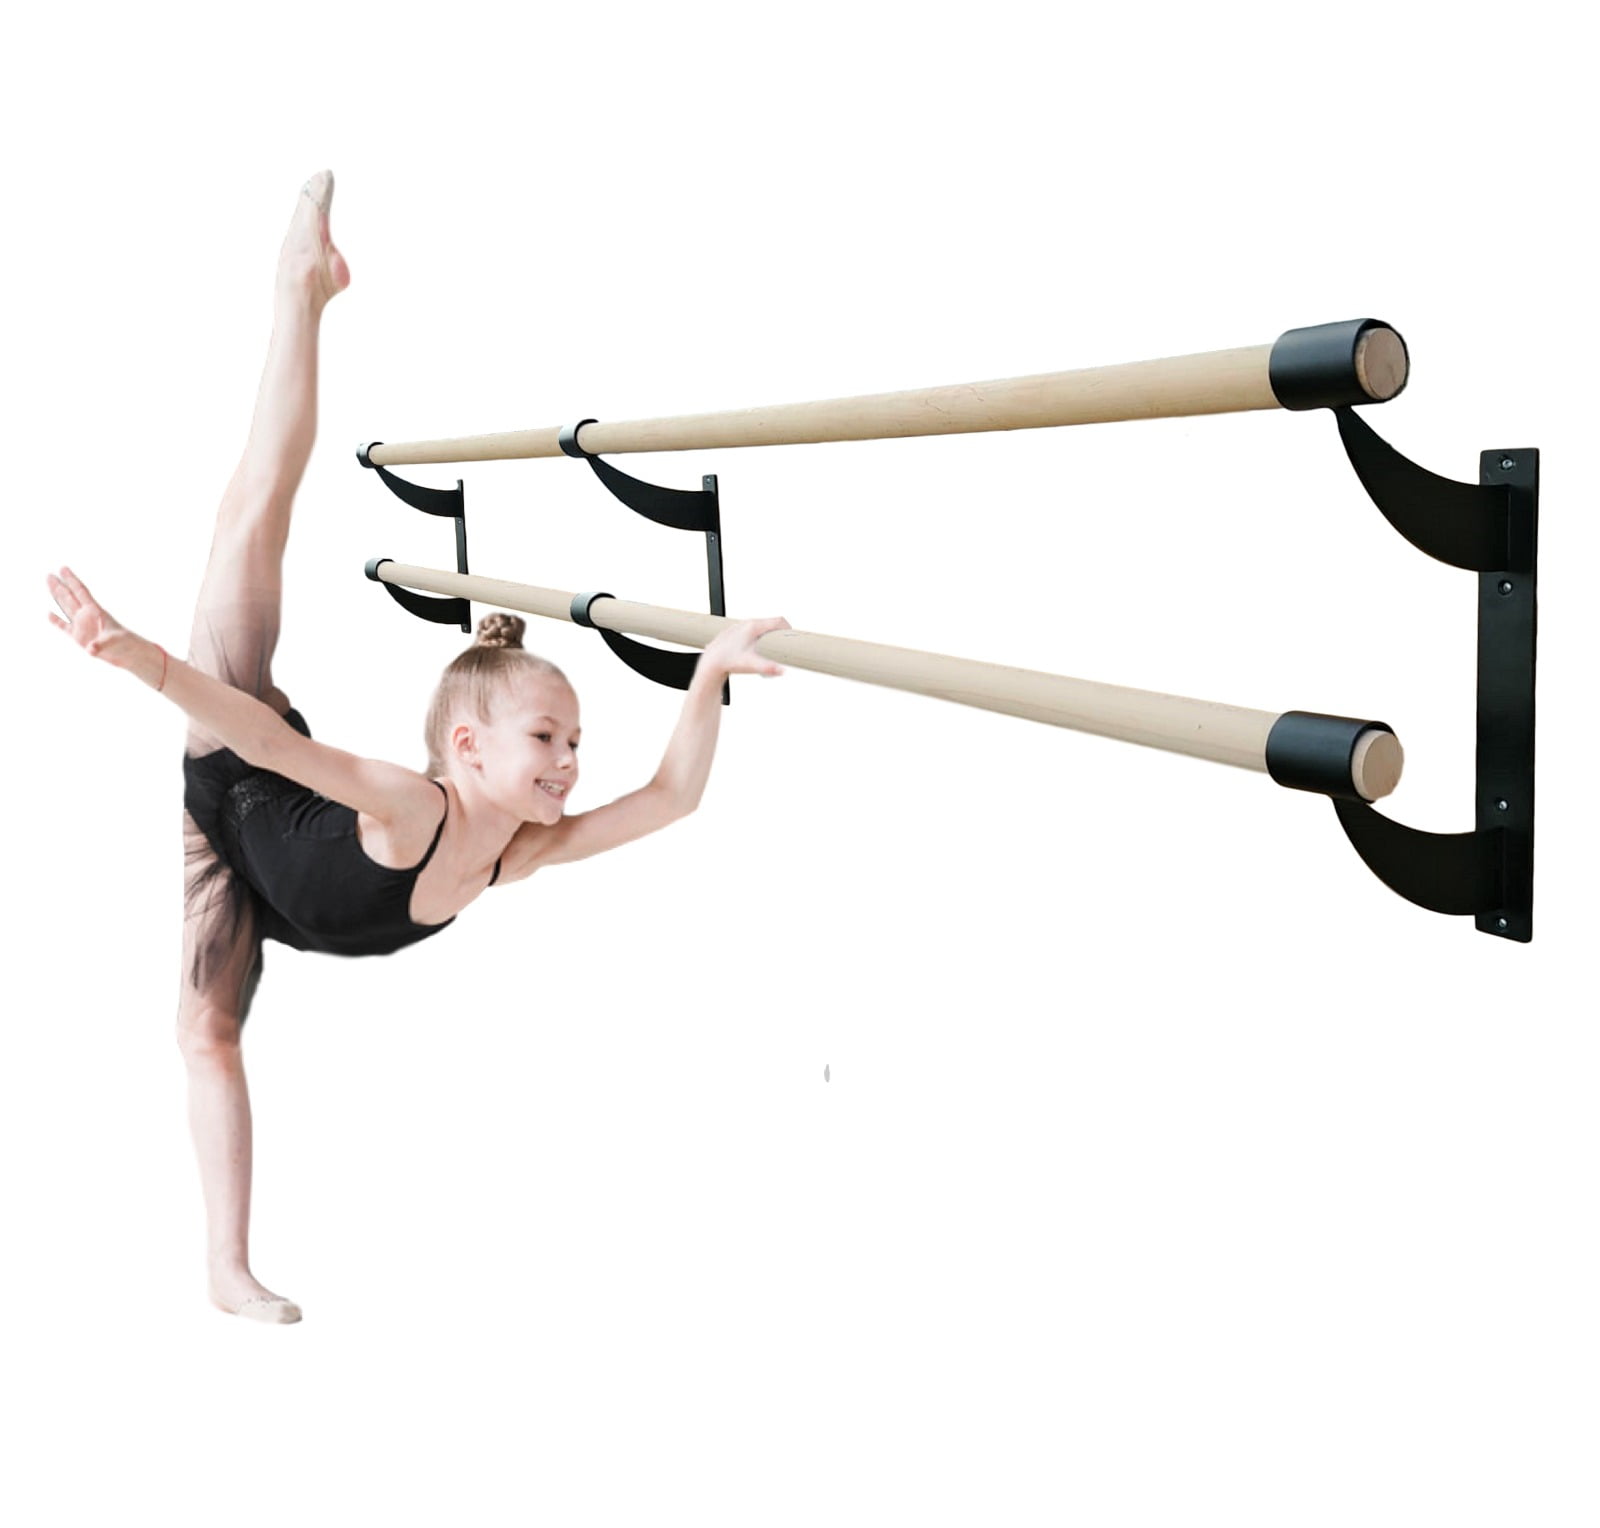 SUPERIORBAND - Ballet Stretch Band for Dance & Gymnastics